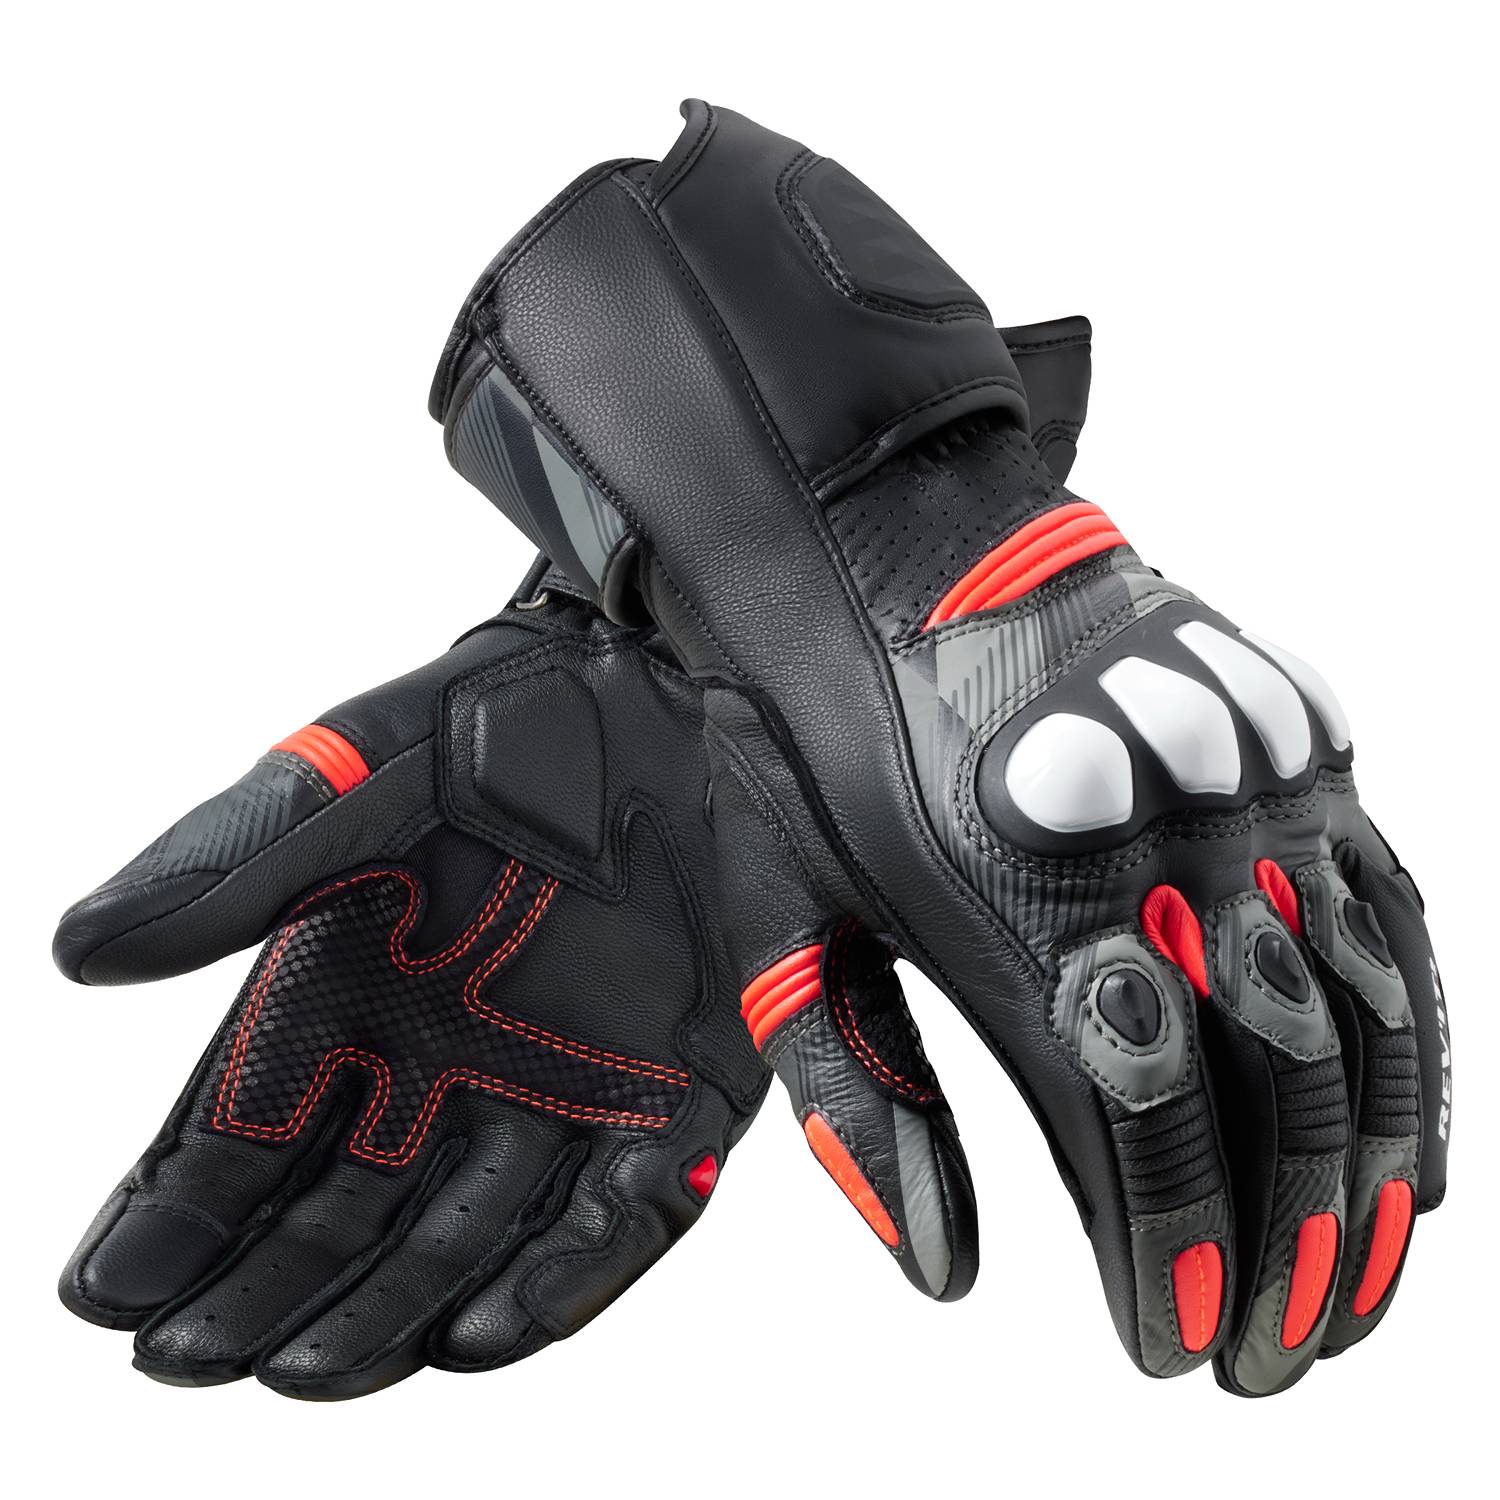 Image of REV'IT! League 2 Gloves Black Neon Red Size M EN